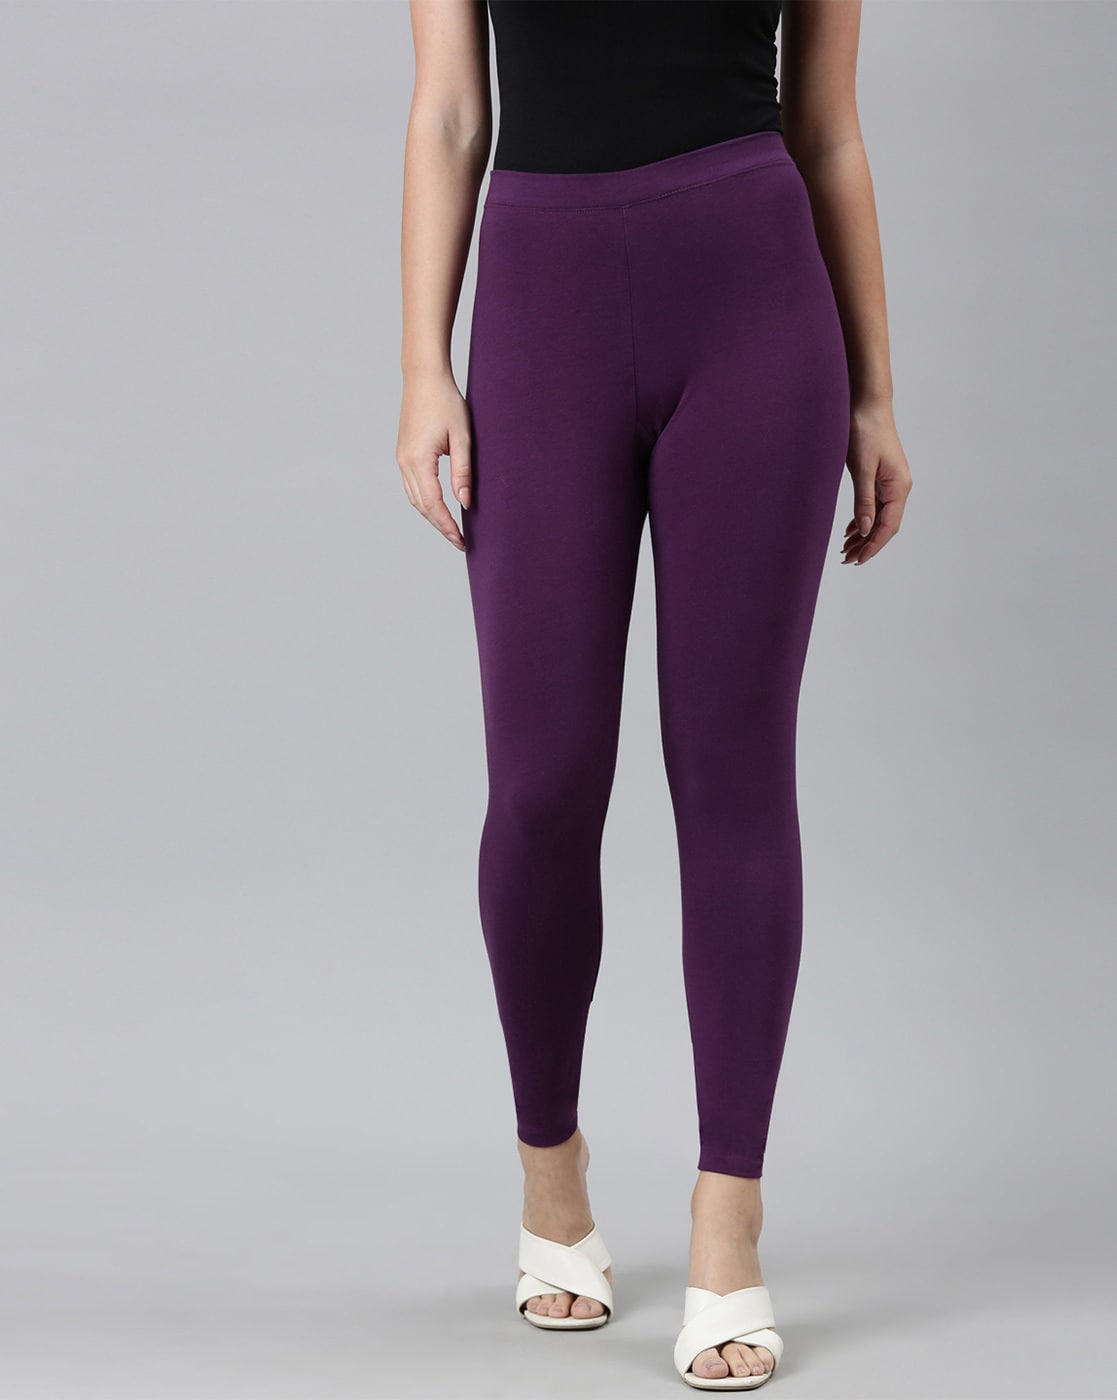 Buy Purple Leggings for Women by Kryptic Online